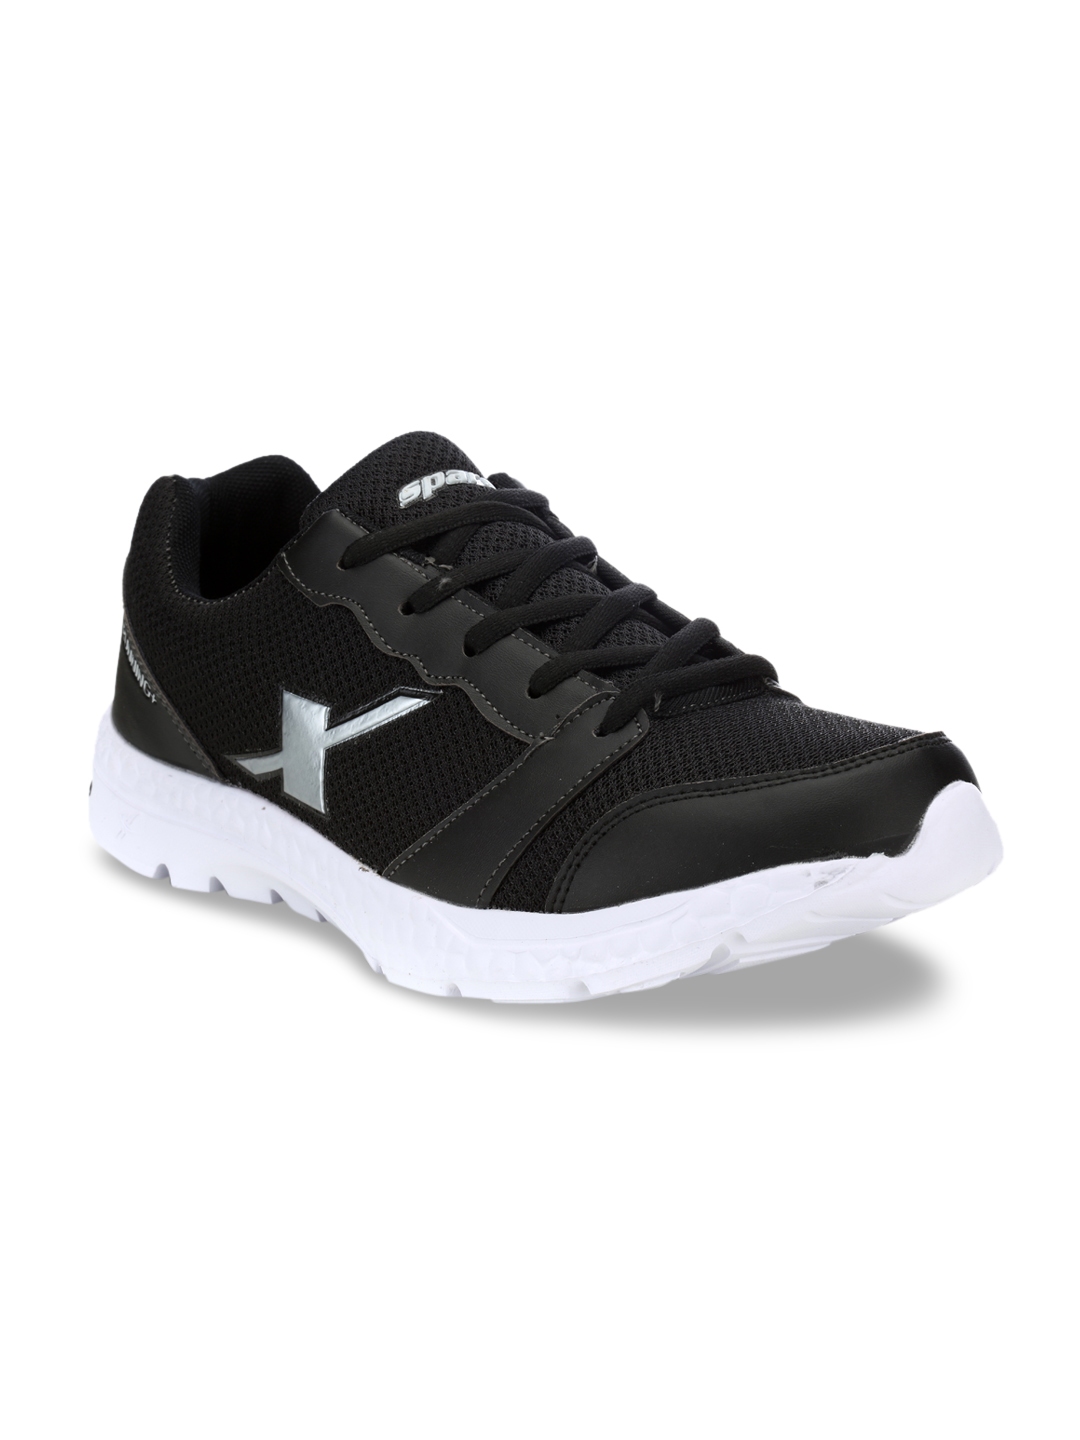 Buy Sparx Men Black Running Shoes - Sports Shoes for Men 2337773 | Myntra